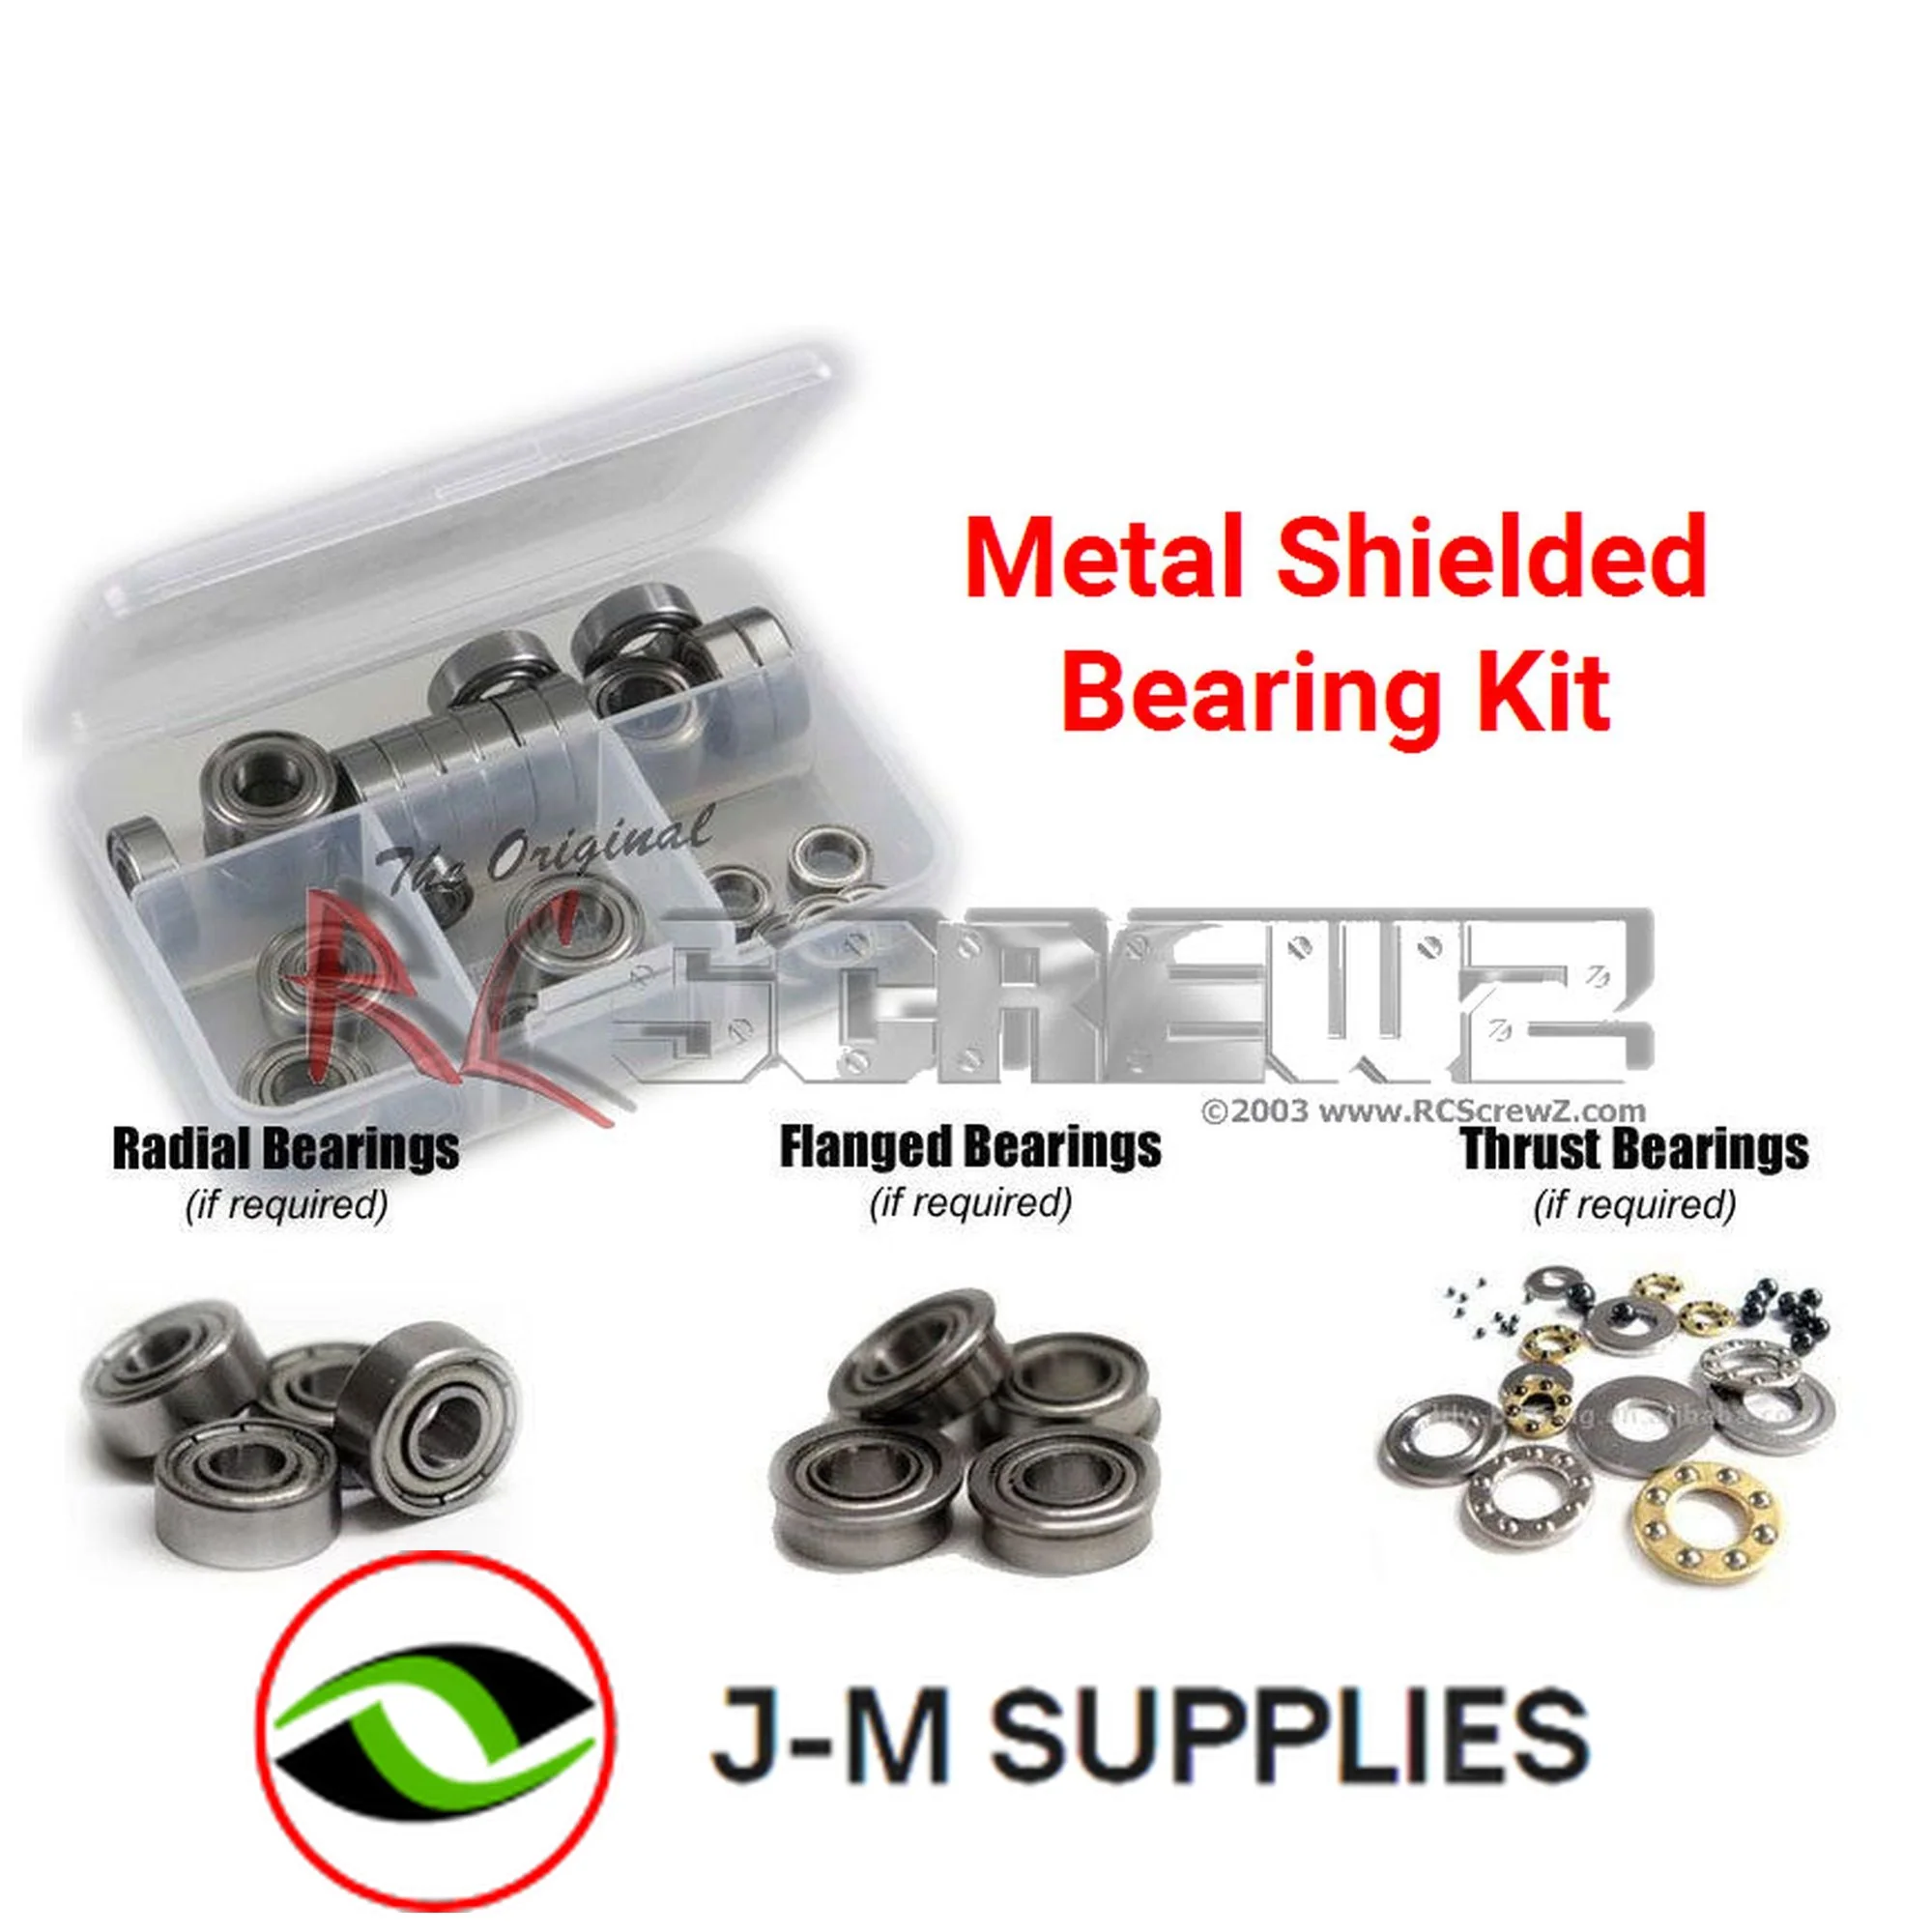 RCScrewZ Metal Shielded Bearing Kit tam018b for Tamiya TA03F Pro #58200 - Picture 1 of 12